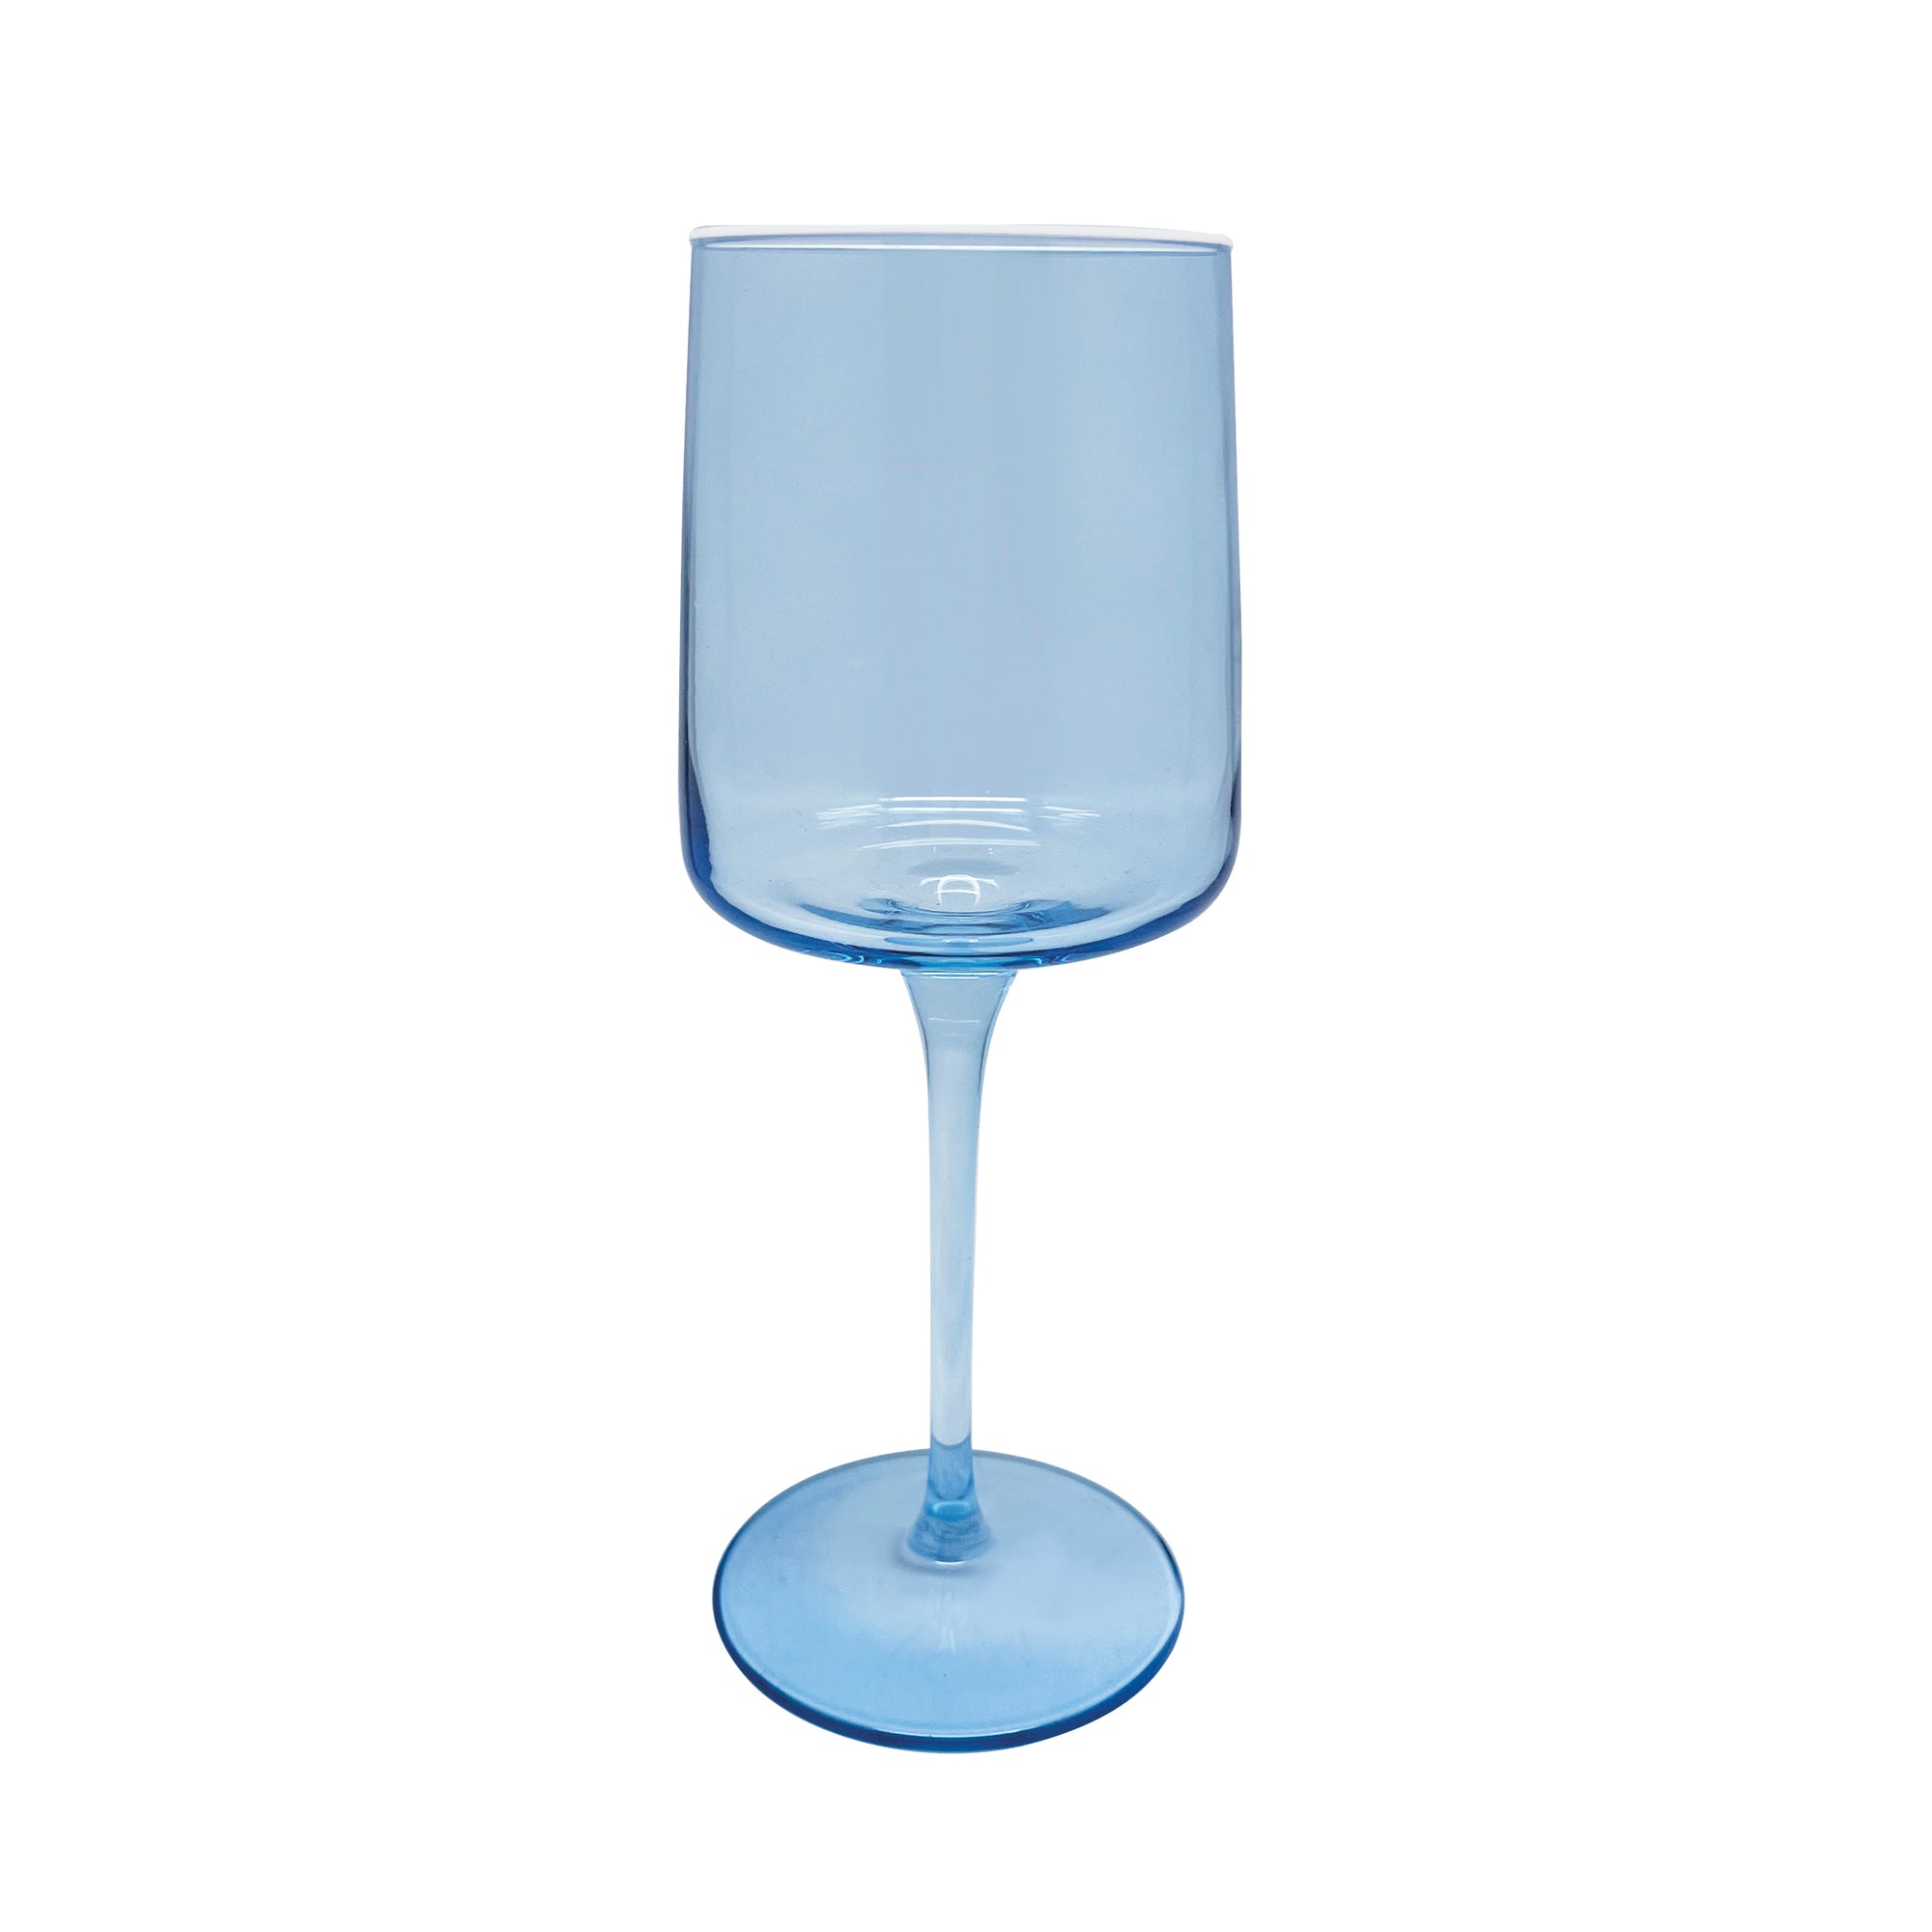 Fine Line Light Blue with White Rim Wine Glass